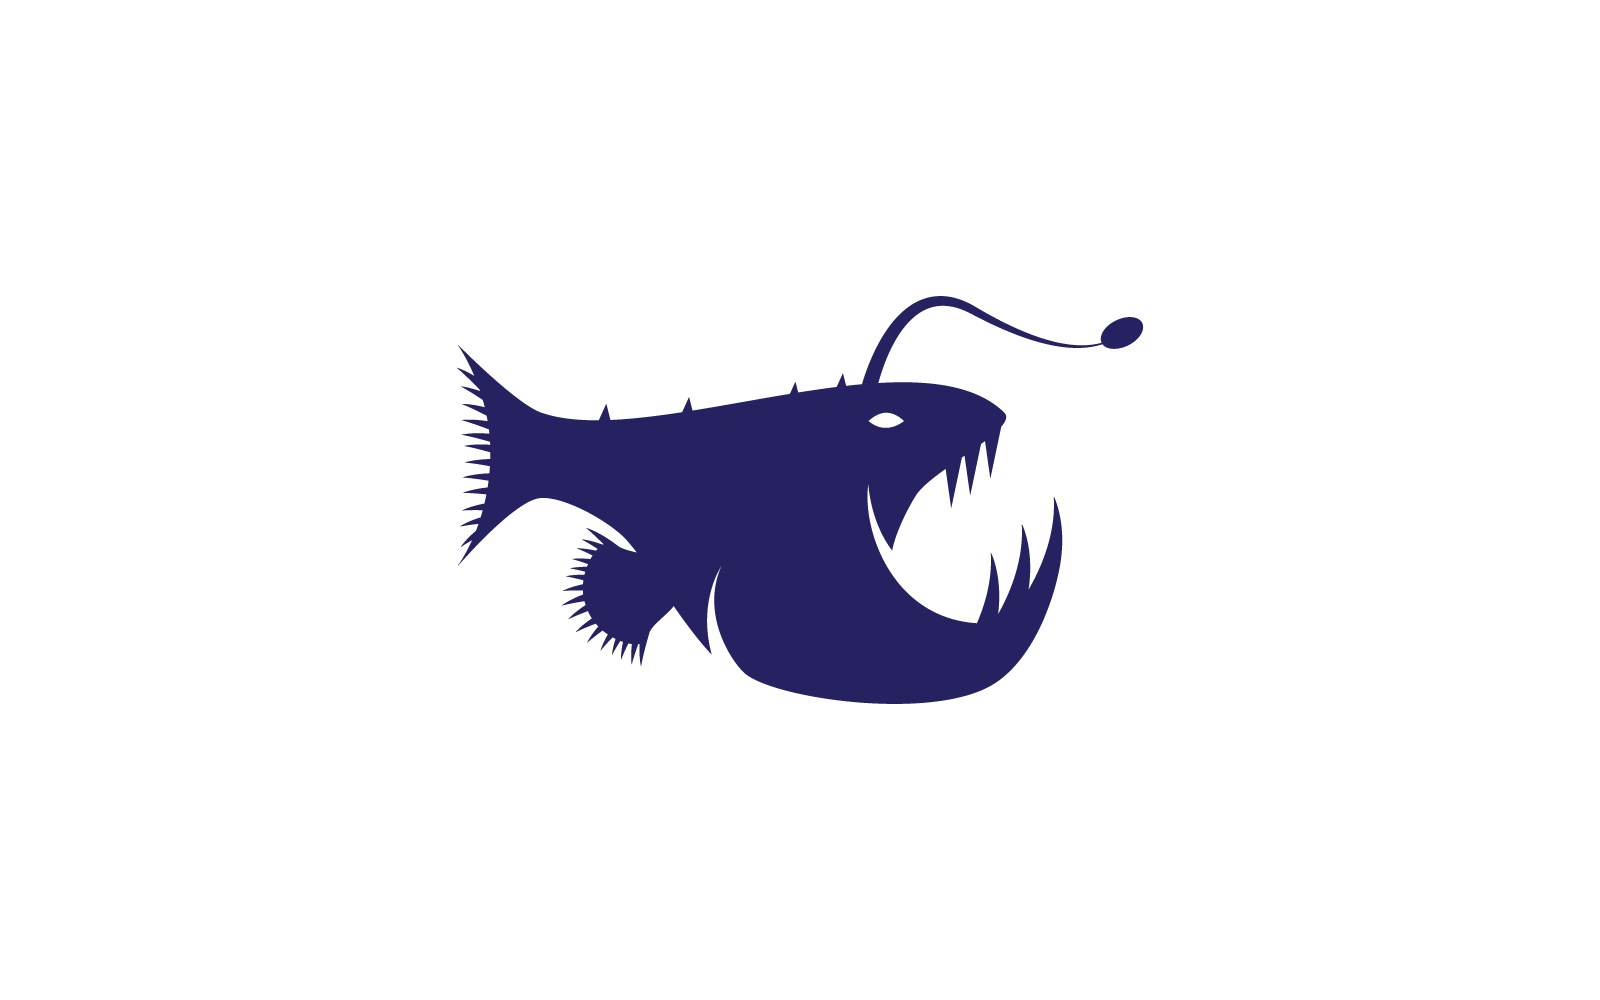 Angler fish logo illustration vector flat design template